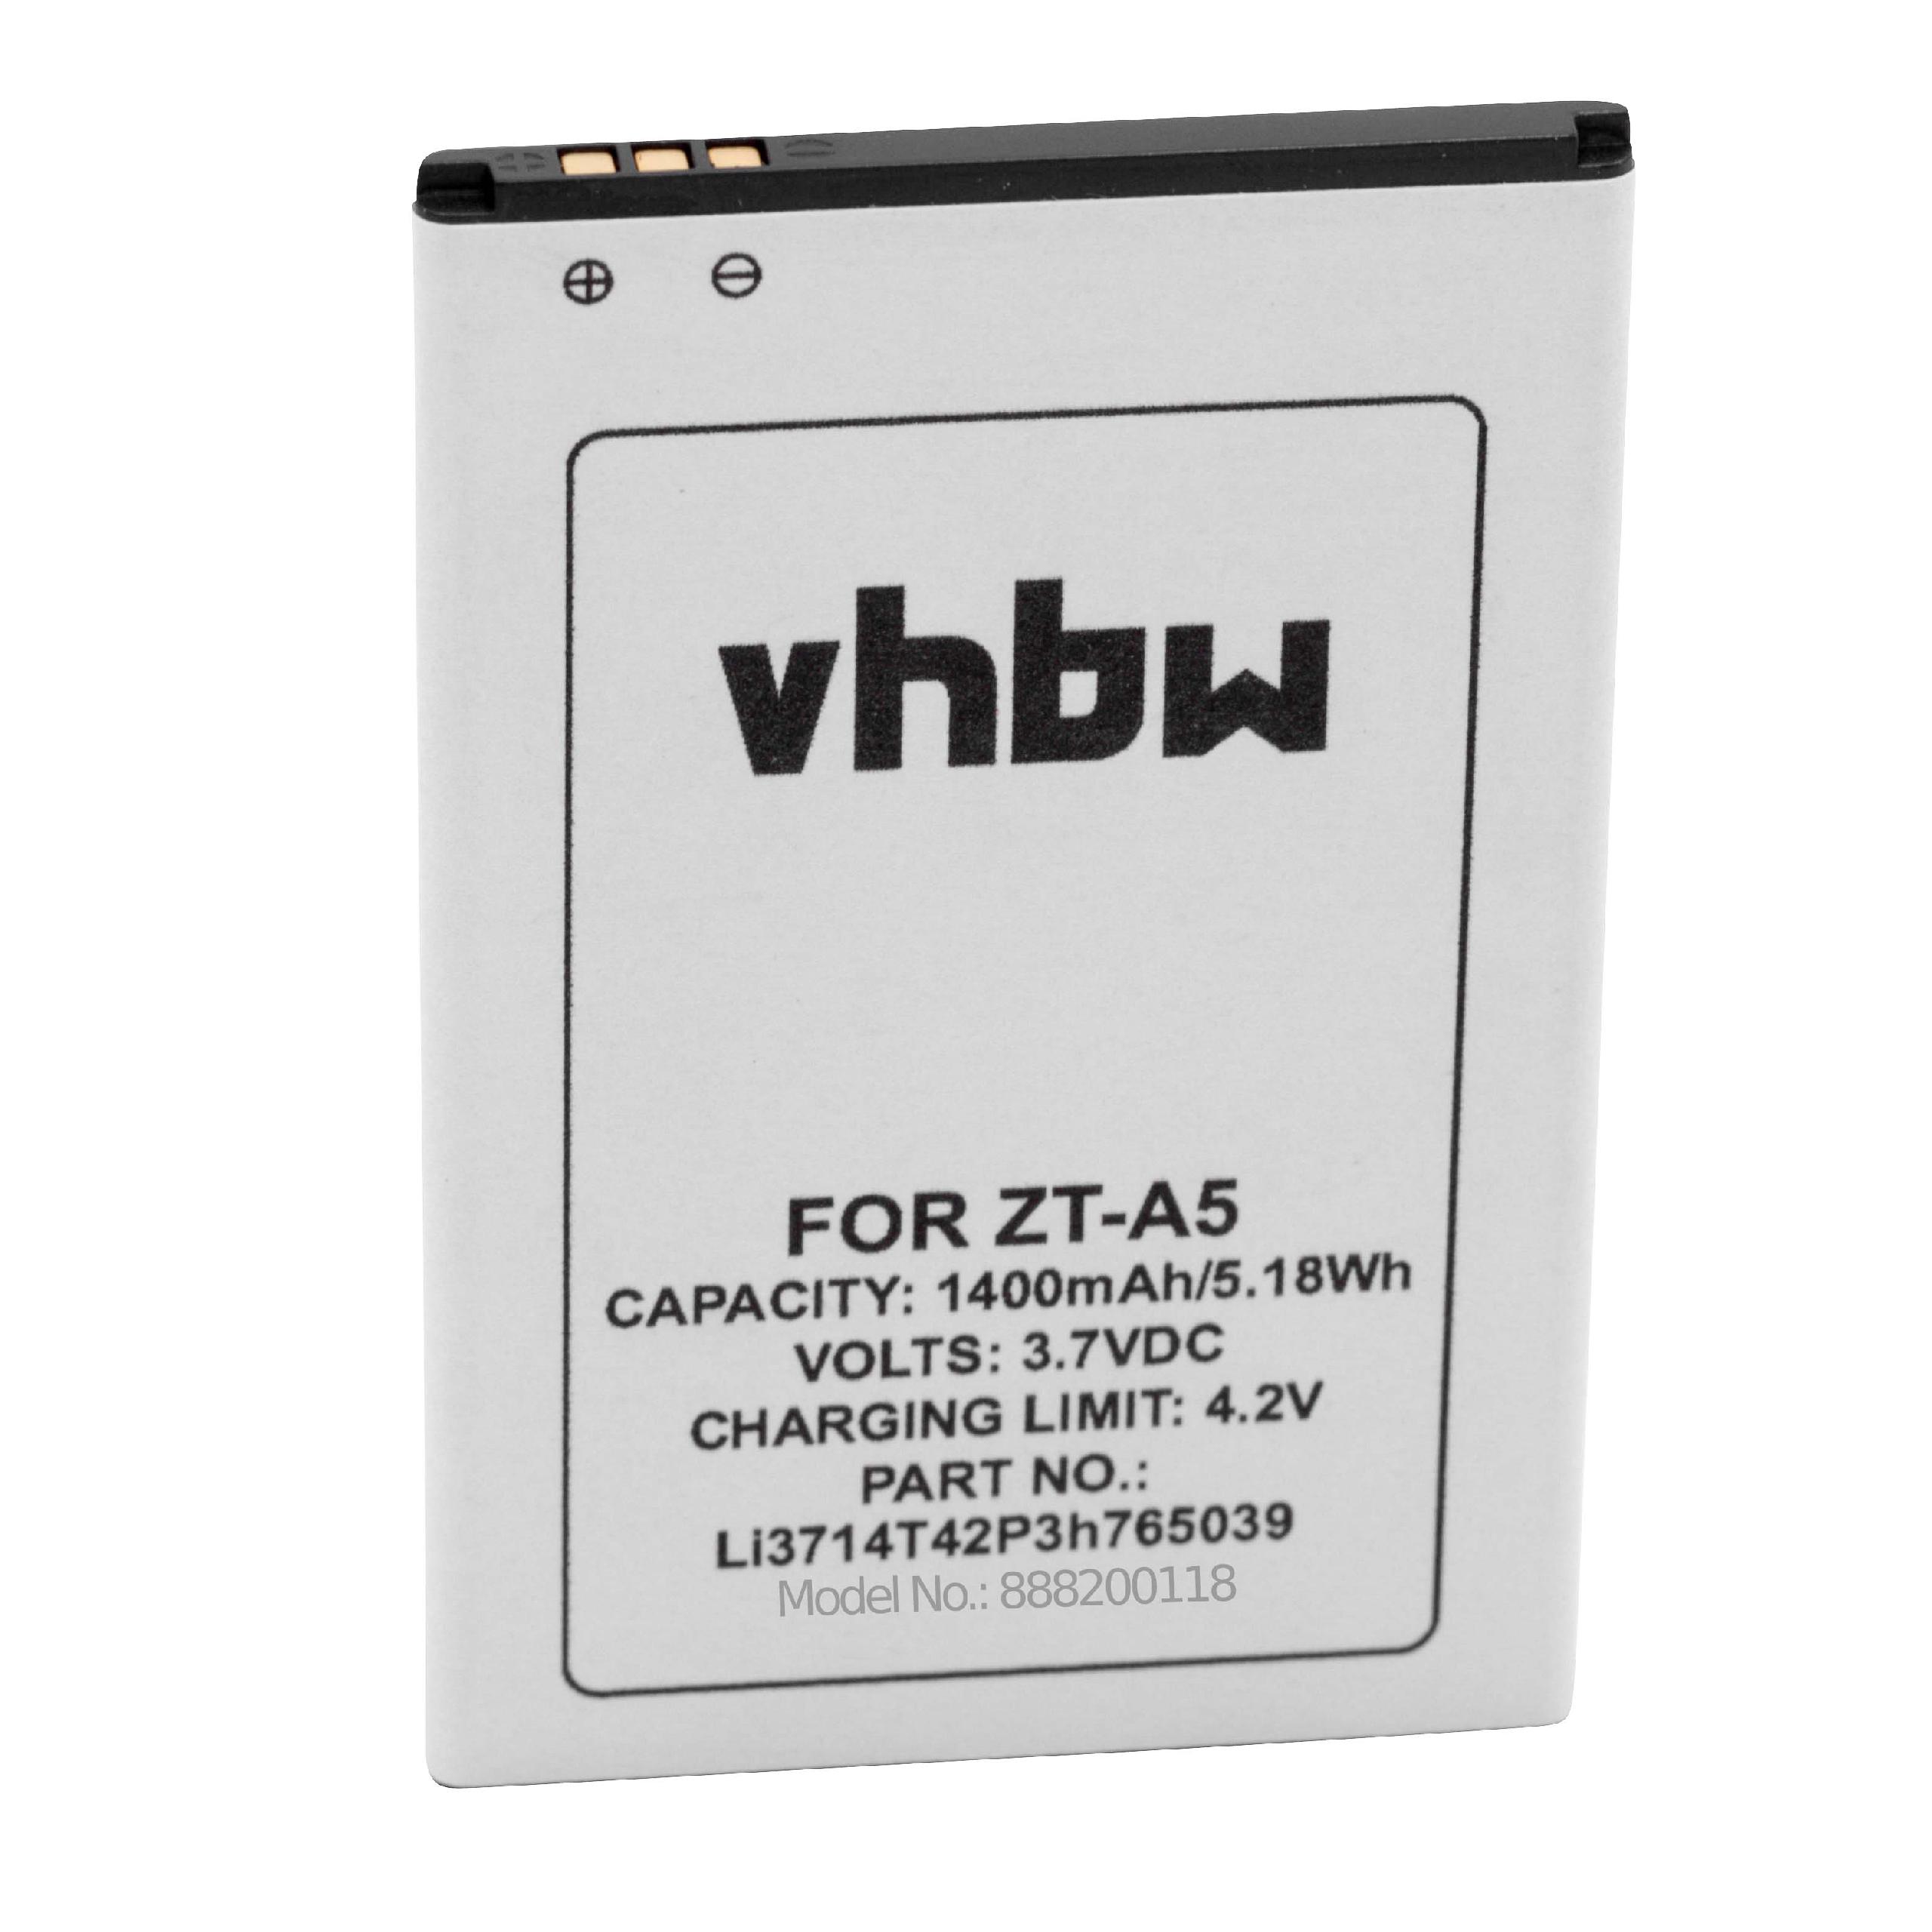 Mobile Phone Battery Replacement for ZTE Li3714T42P3h765039 - 1400mAh 3.7V Li-Ion